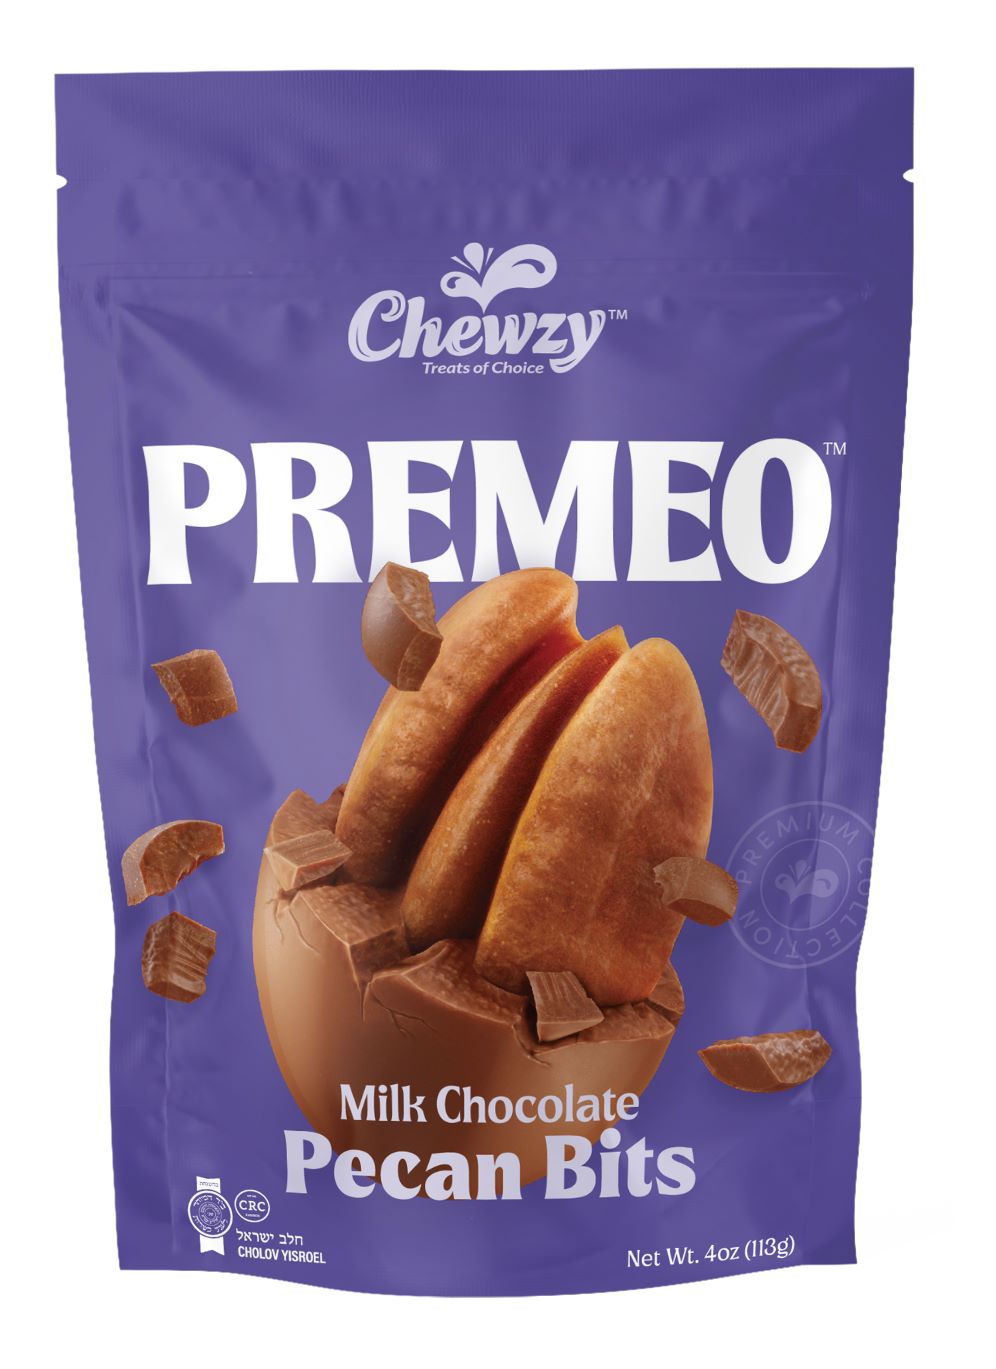 CHEWZY PREMEO MILK CHOCOLATE PECAN BITES